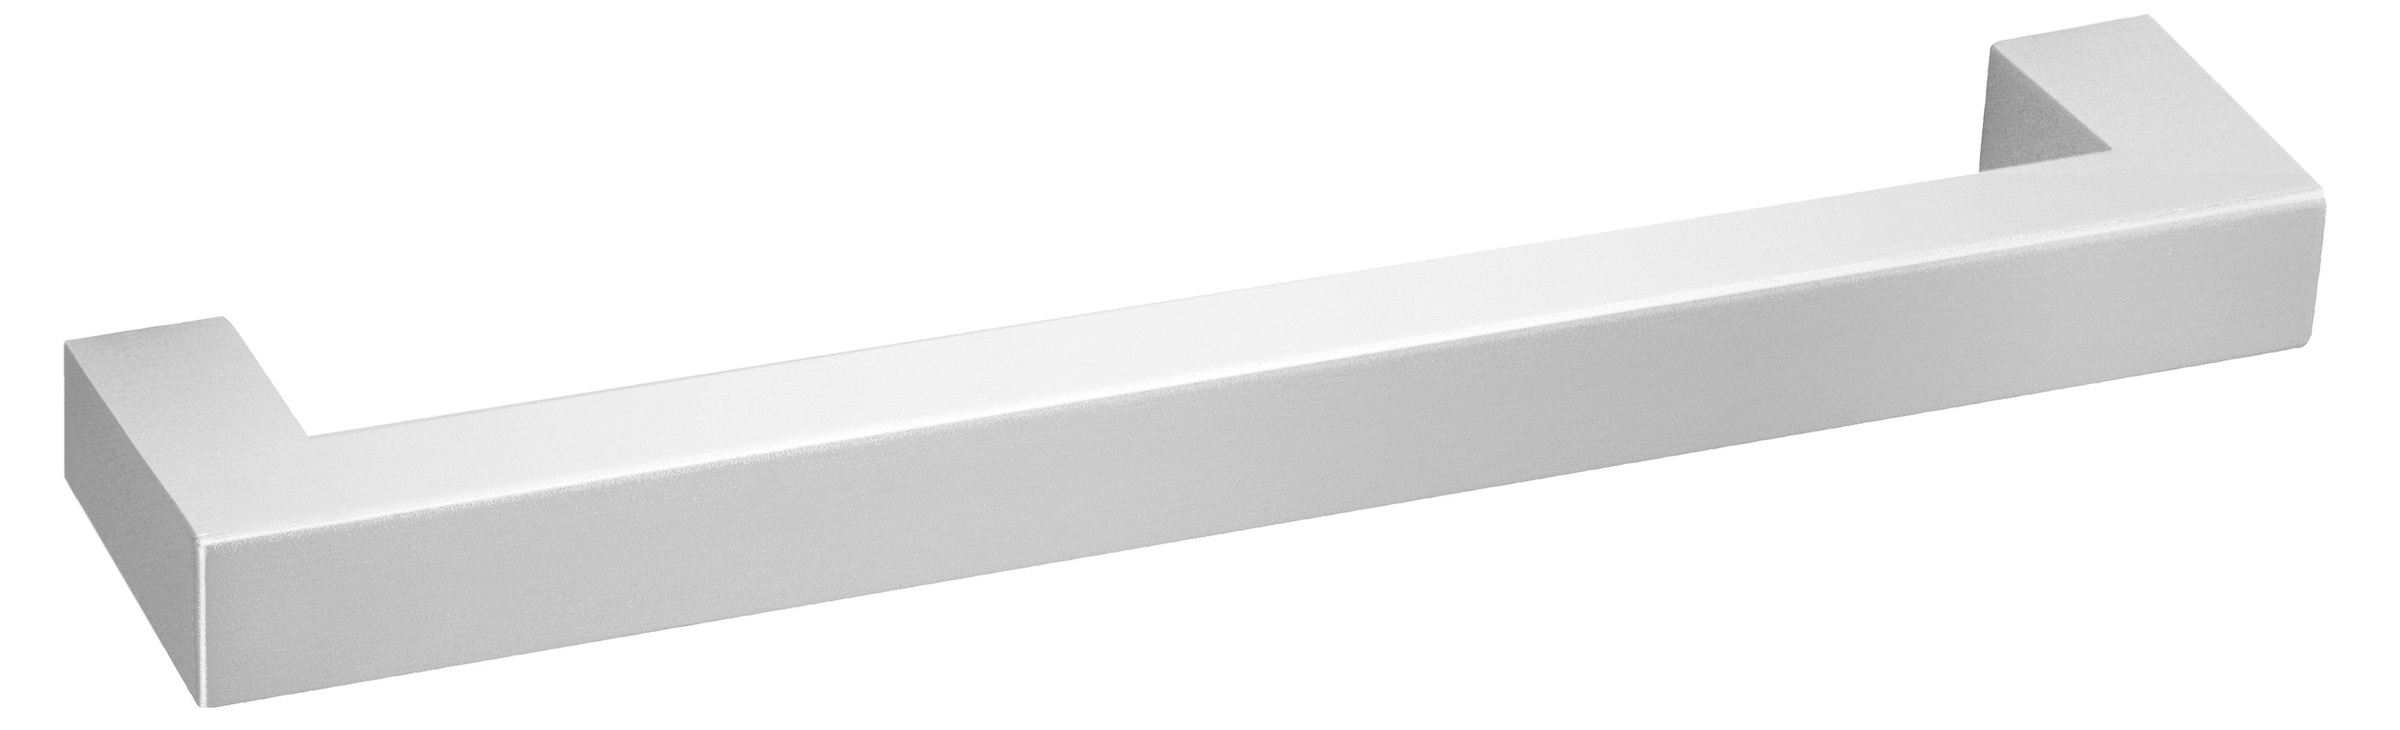 HELD MÖBEL Spülenschrank »Visby«, Breite 60 cm, inkl. Tür/Sockel für Geschirrspüler